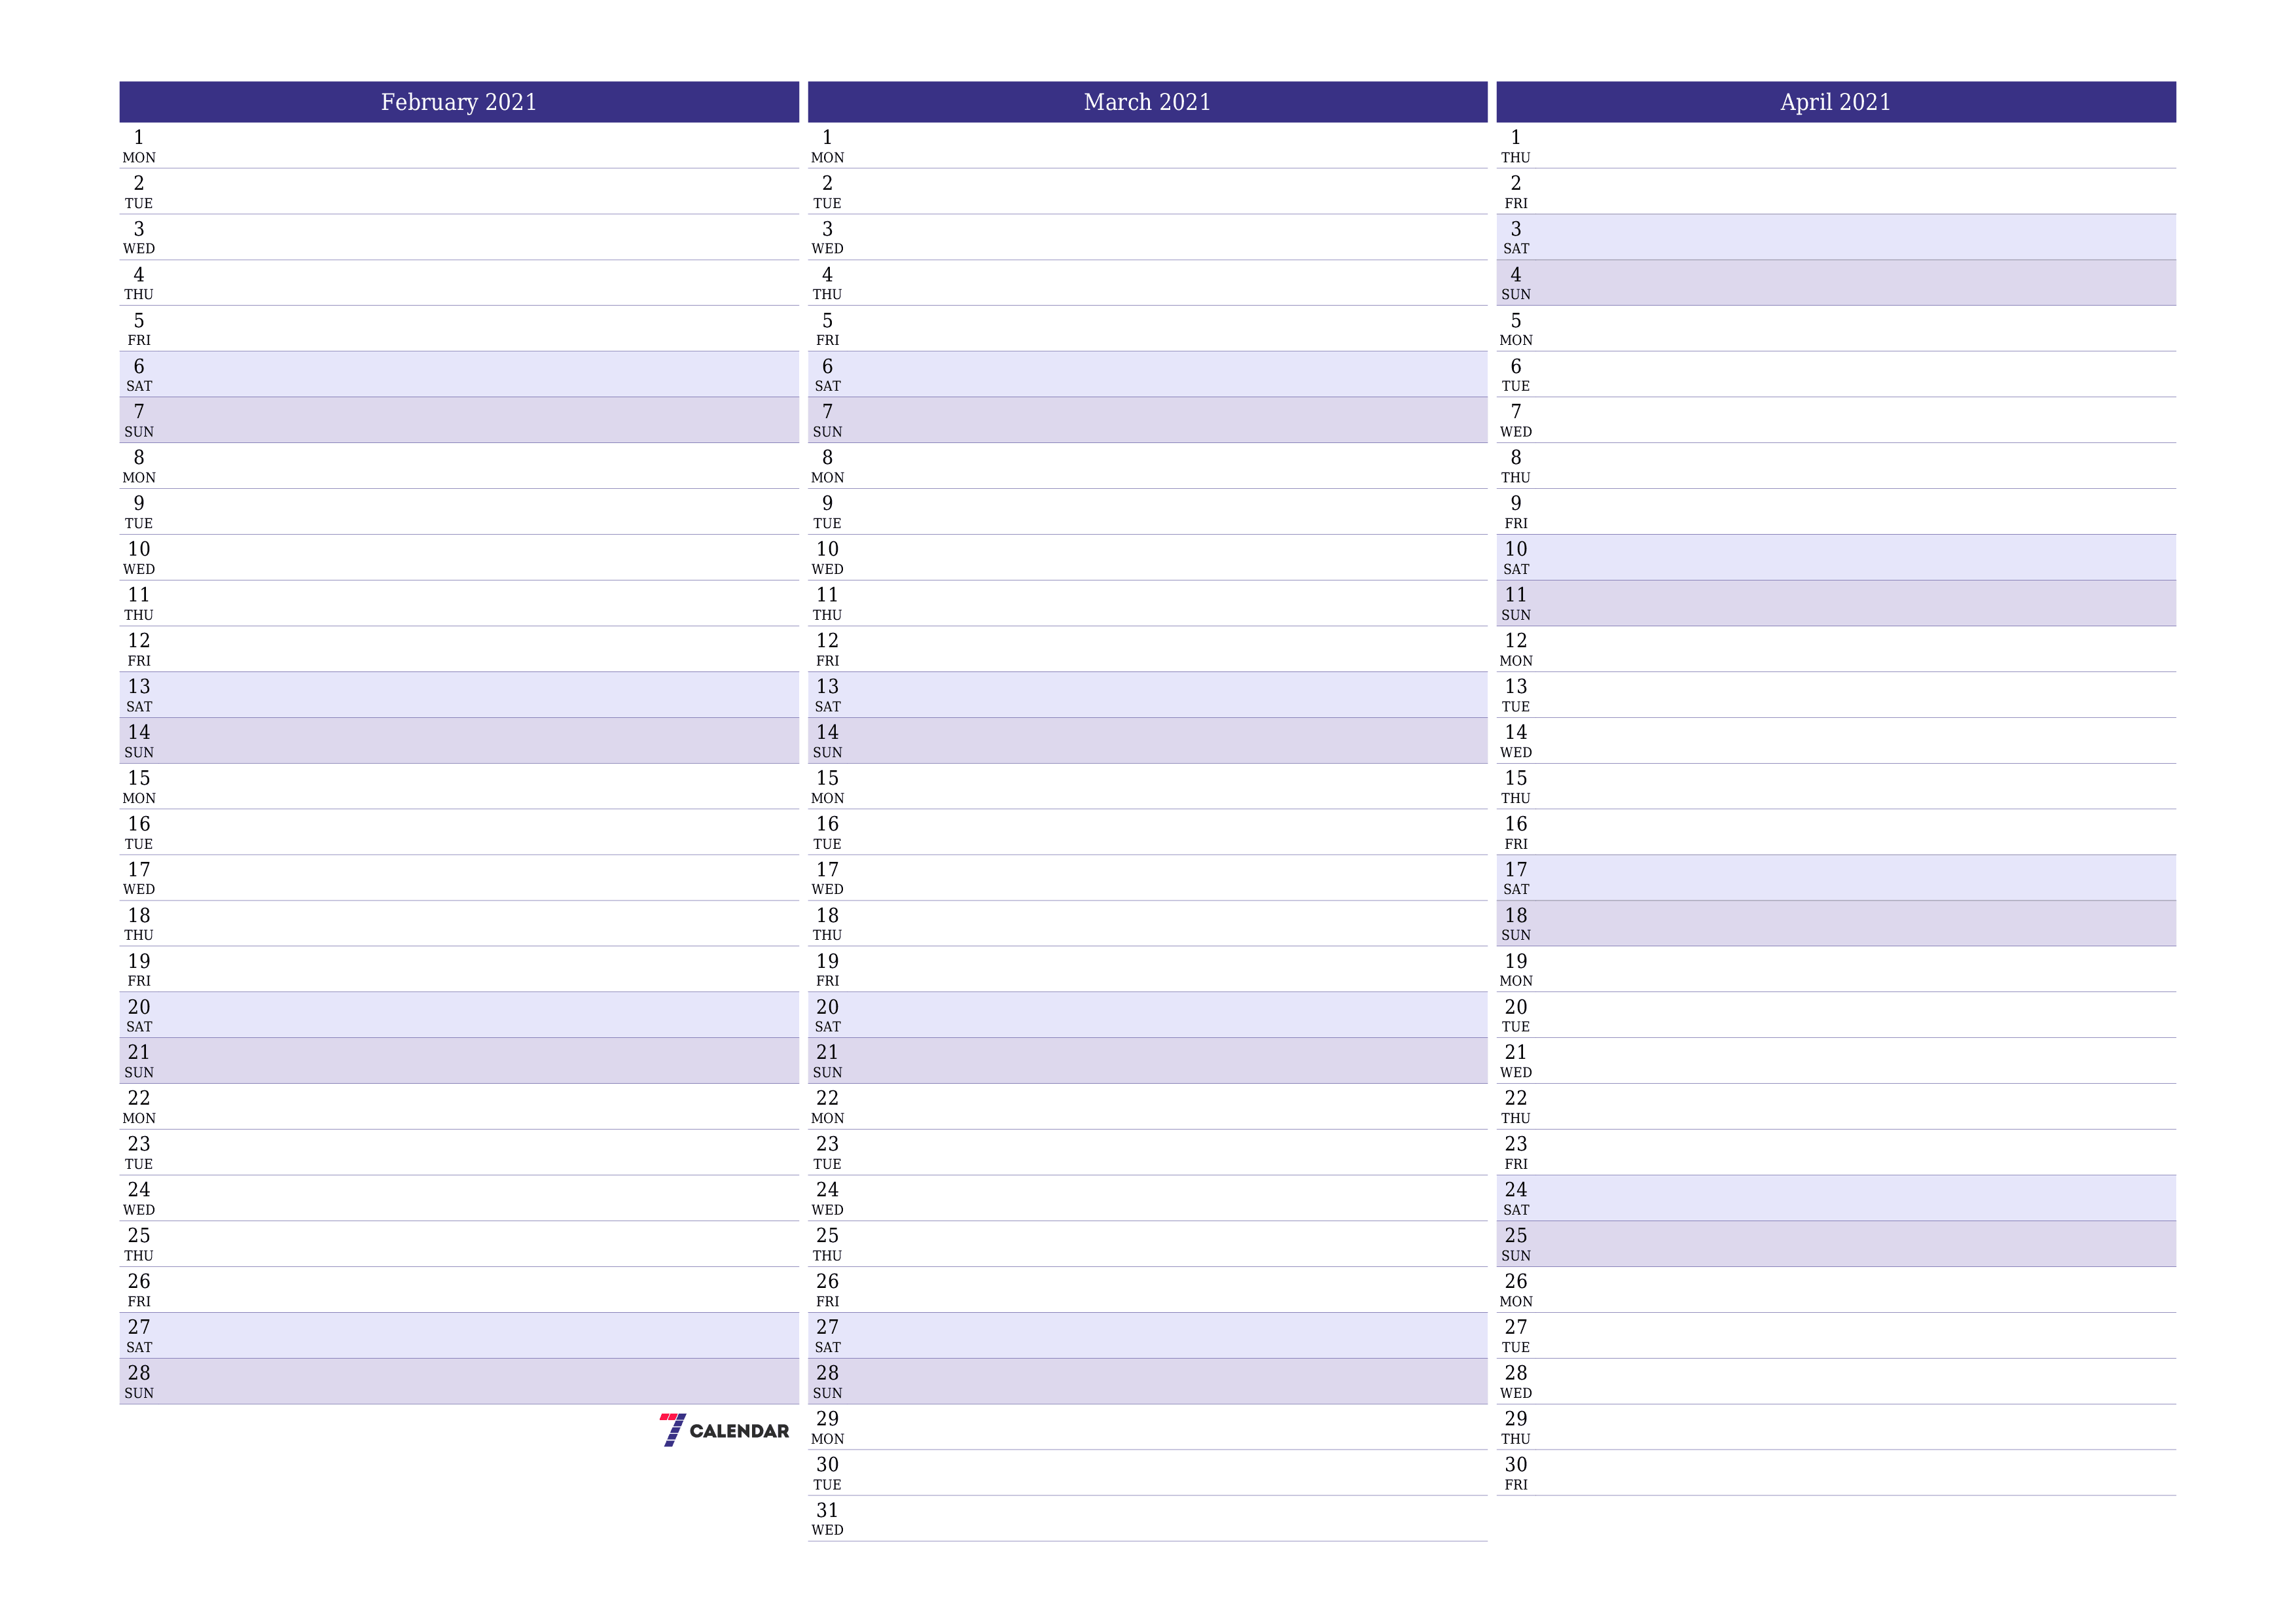 Blank calendar February 2021